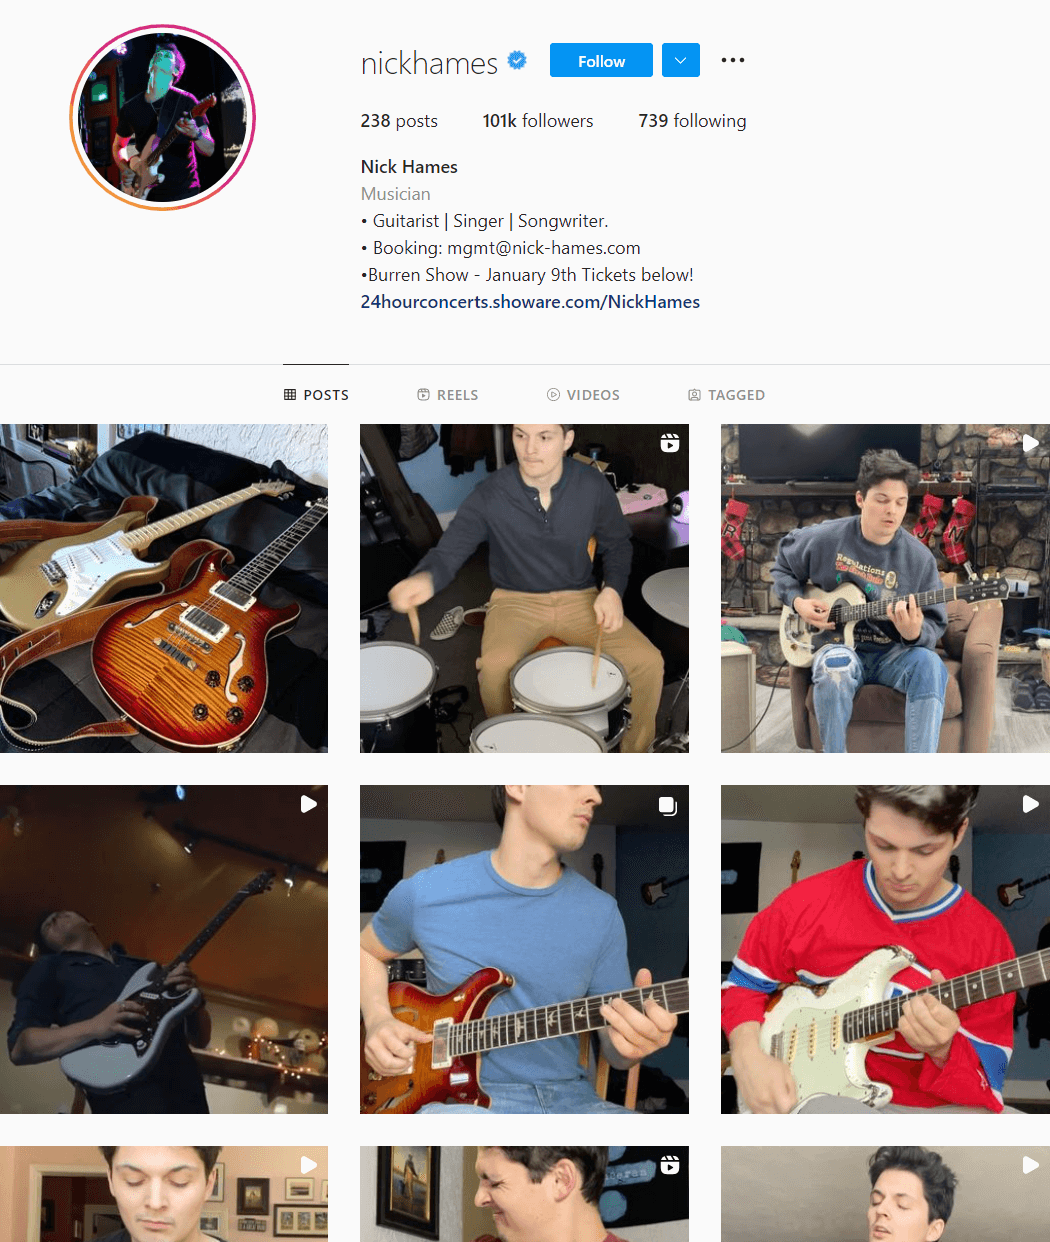 nickhames guitar Instagram account